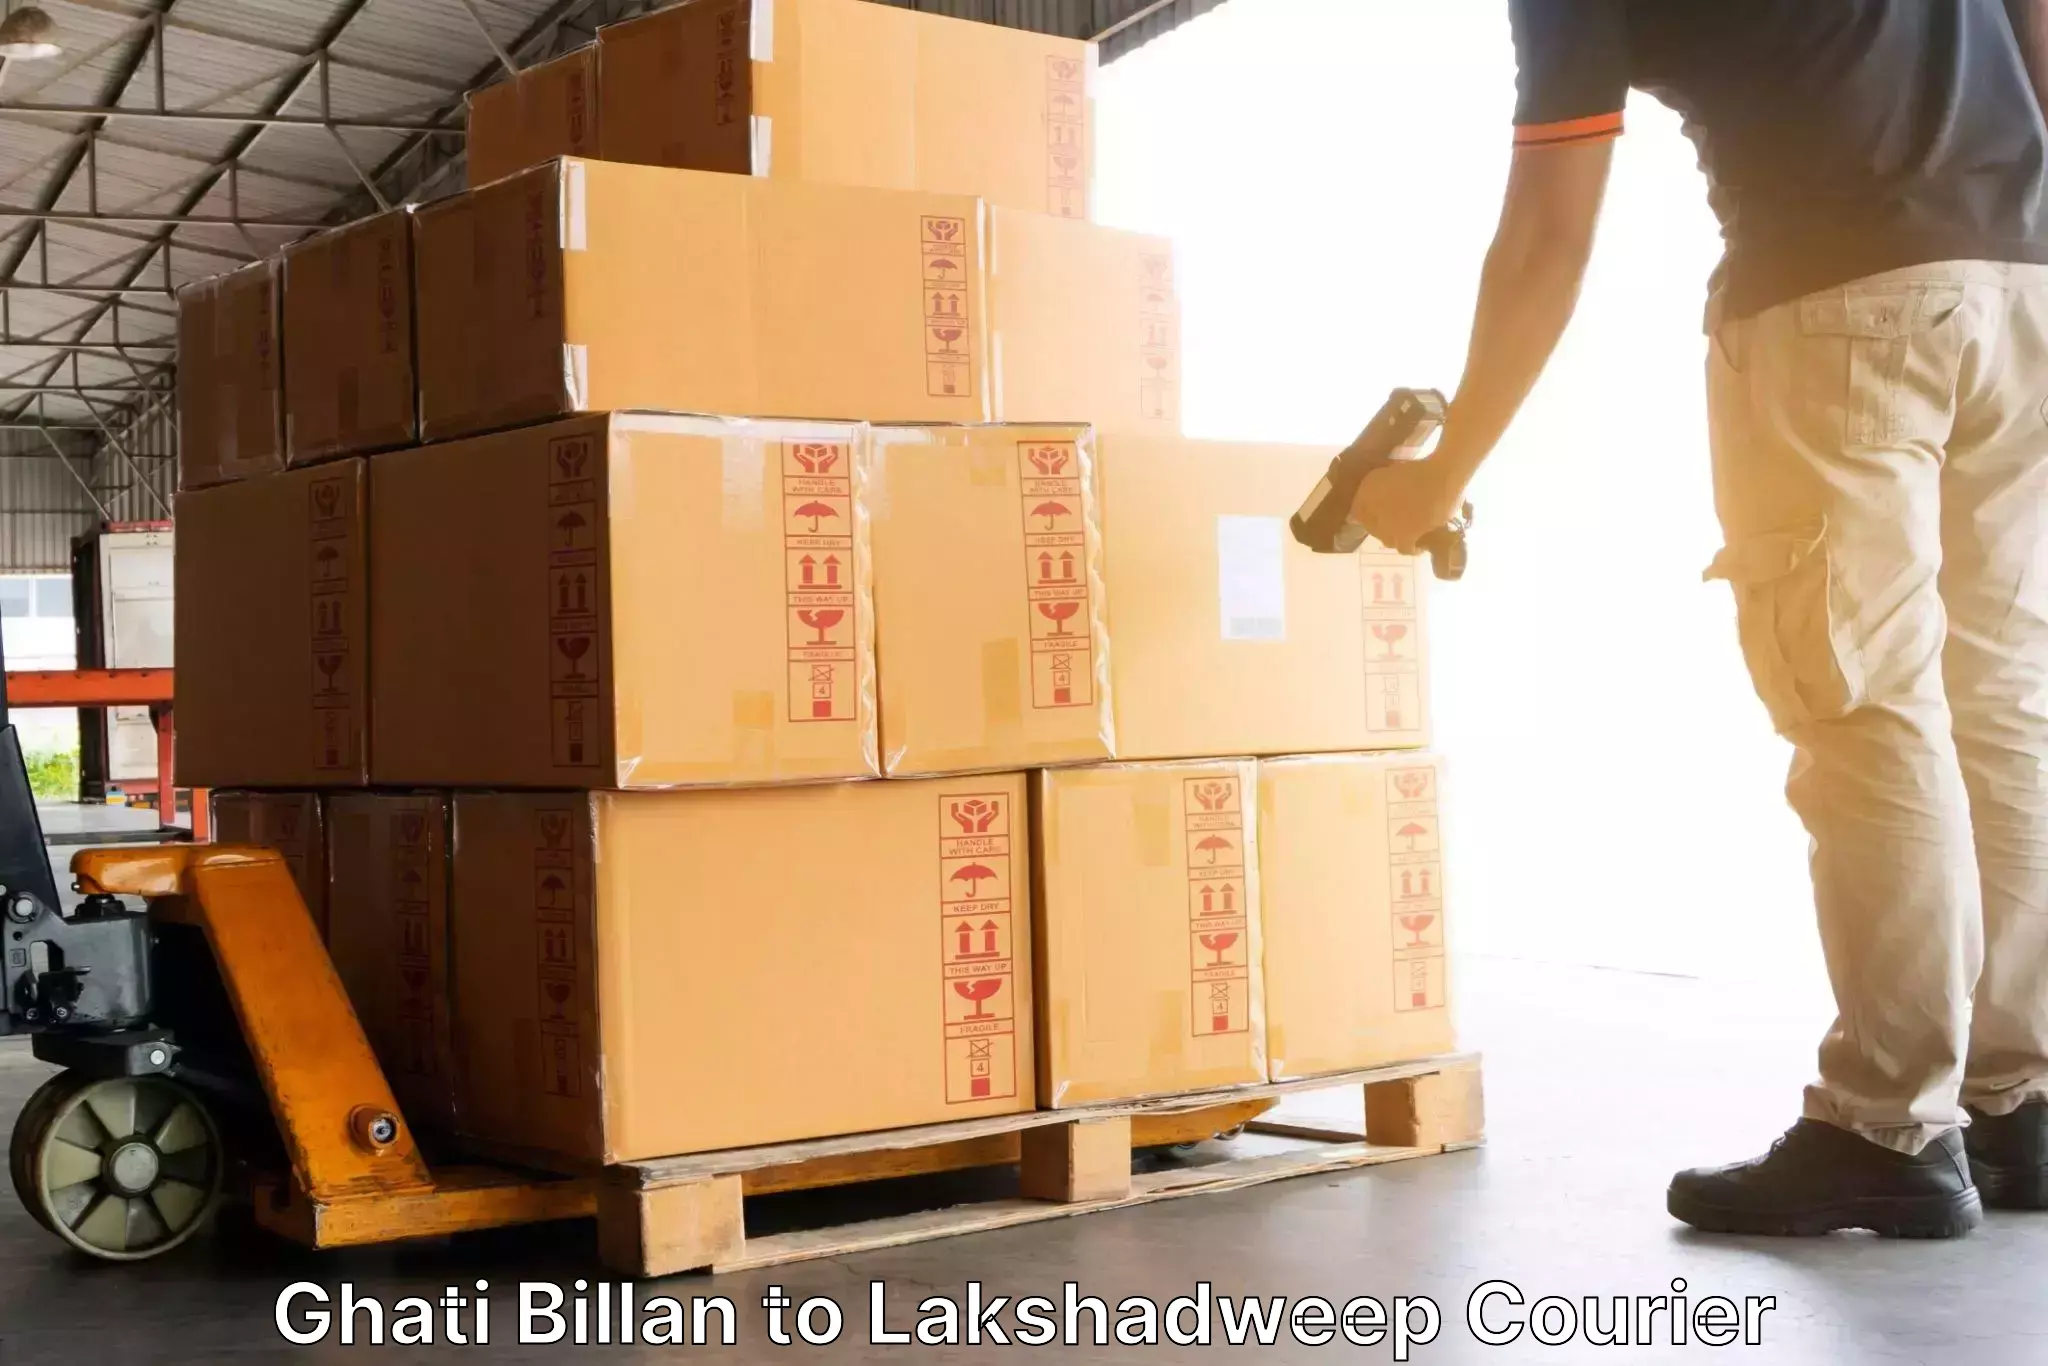 Courier service booking Ghati Billan to Lakshadweep